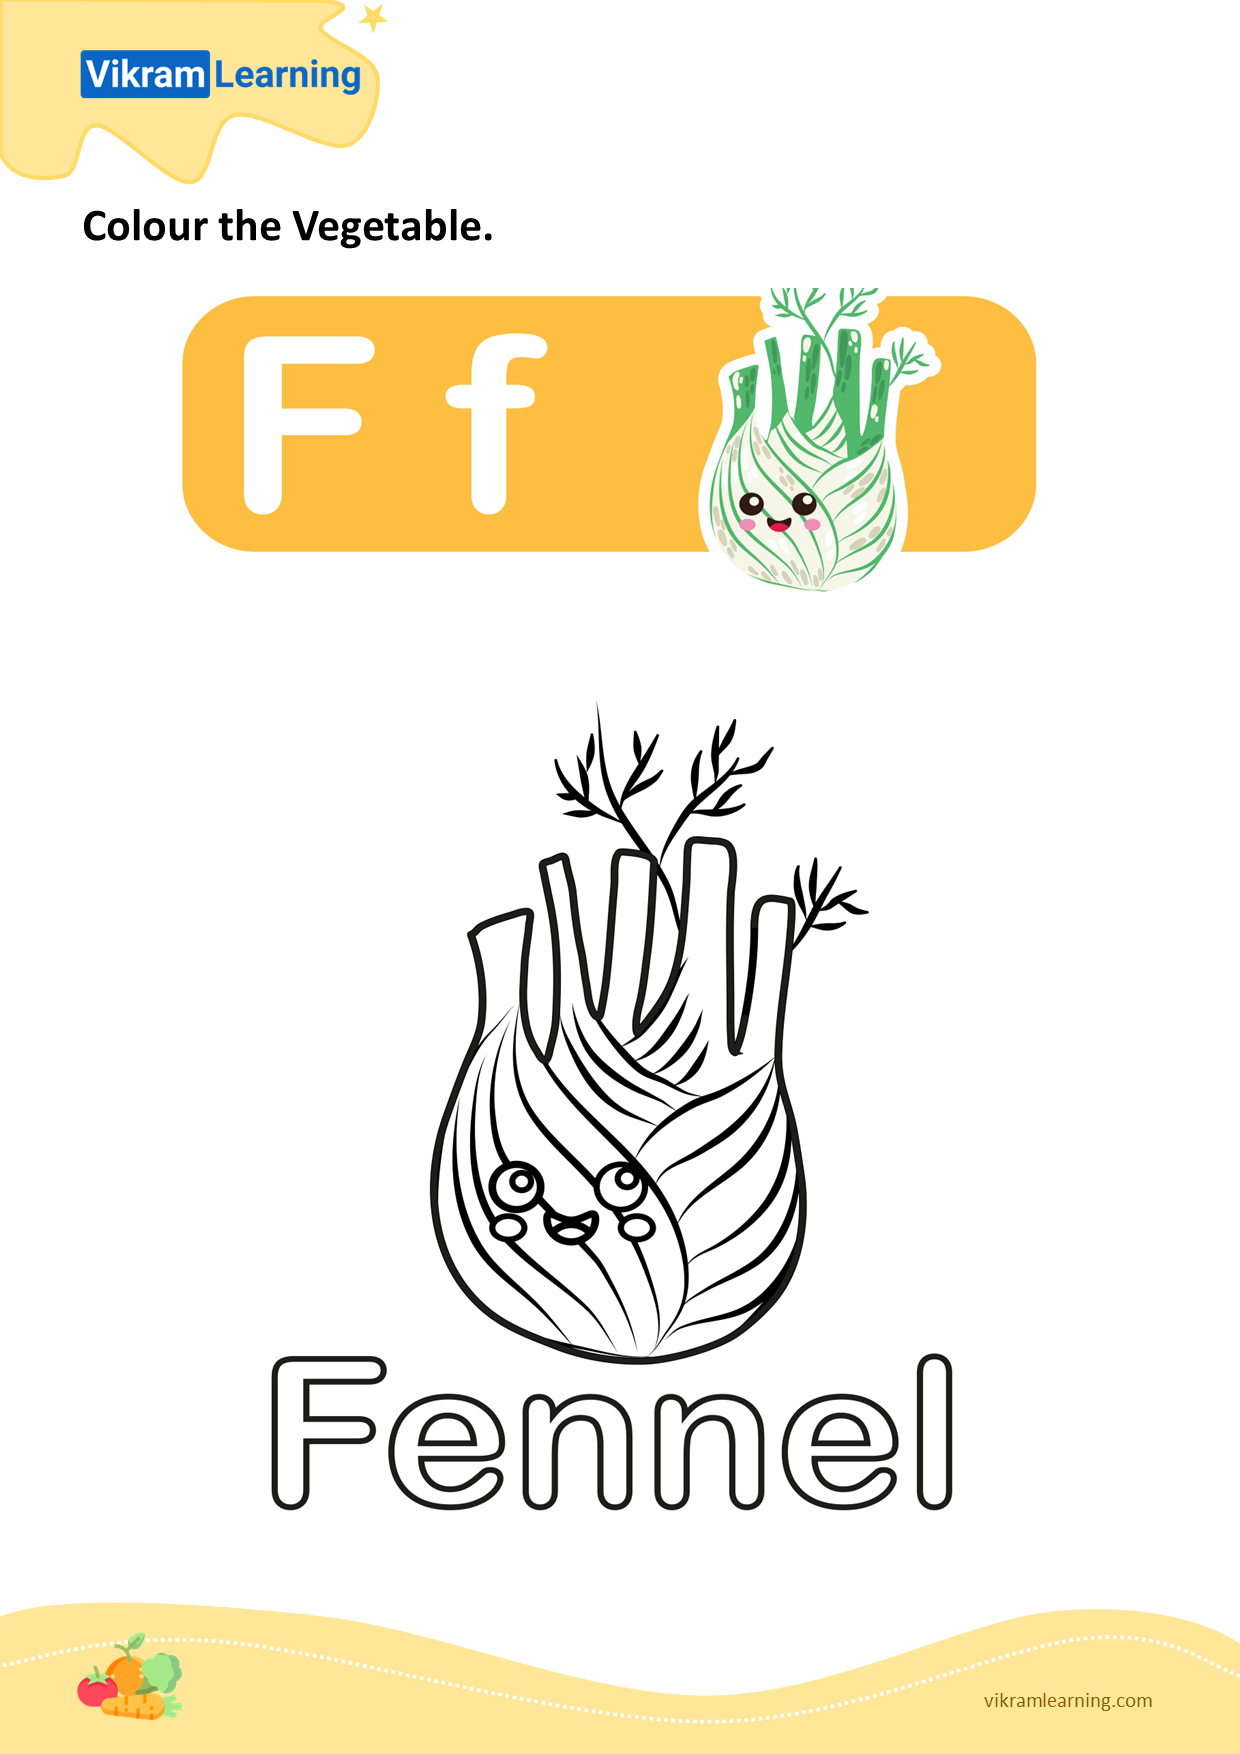 Download colour the vegetable - fennel worksheets